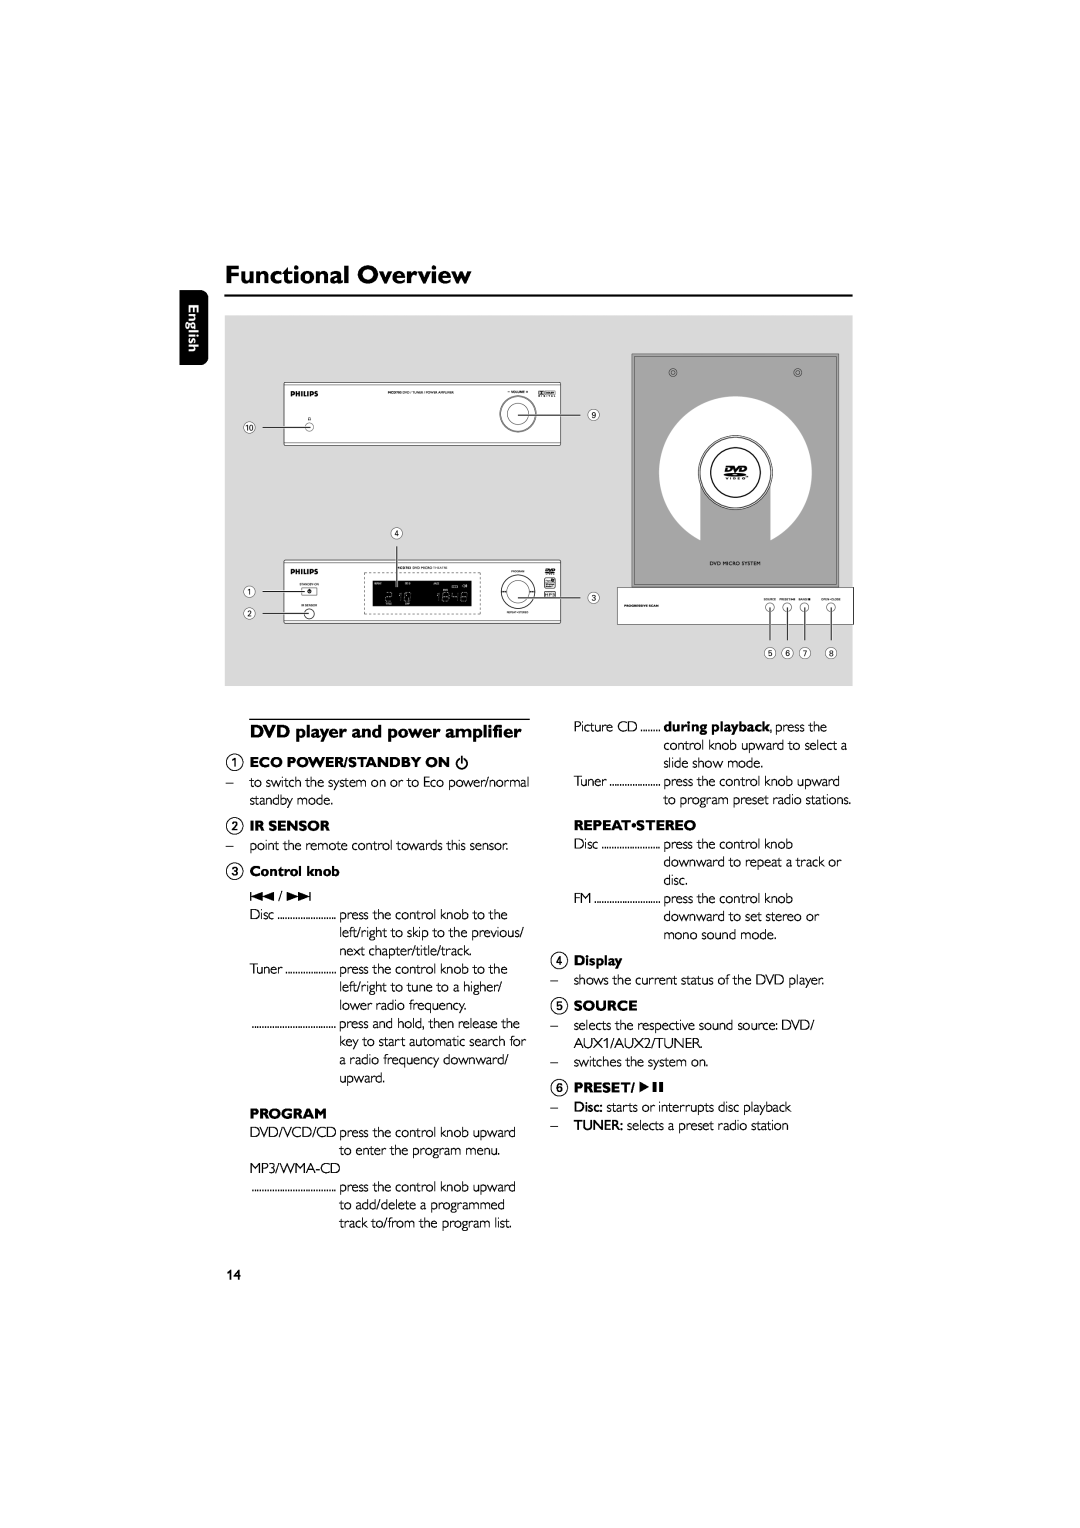 Philips MCD703 Functional Overview, DVD player and power amplifier, English, 1ECO POWER/STANDBY ON B, 2IR SENSOR, Program 